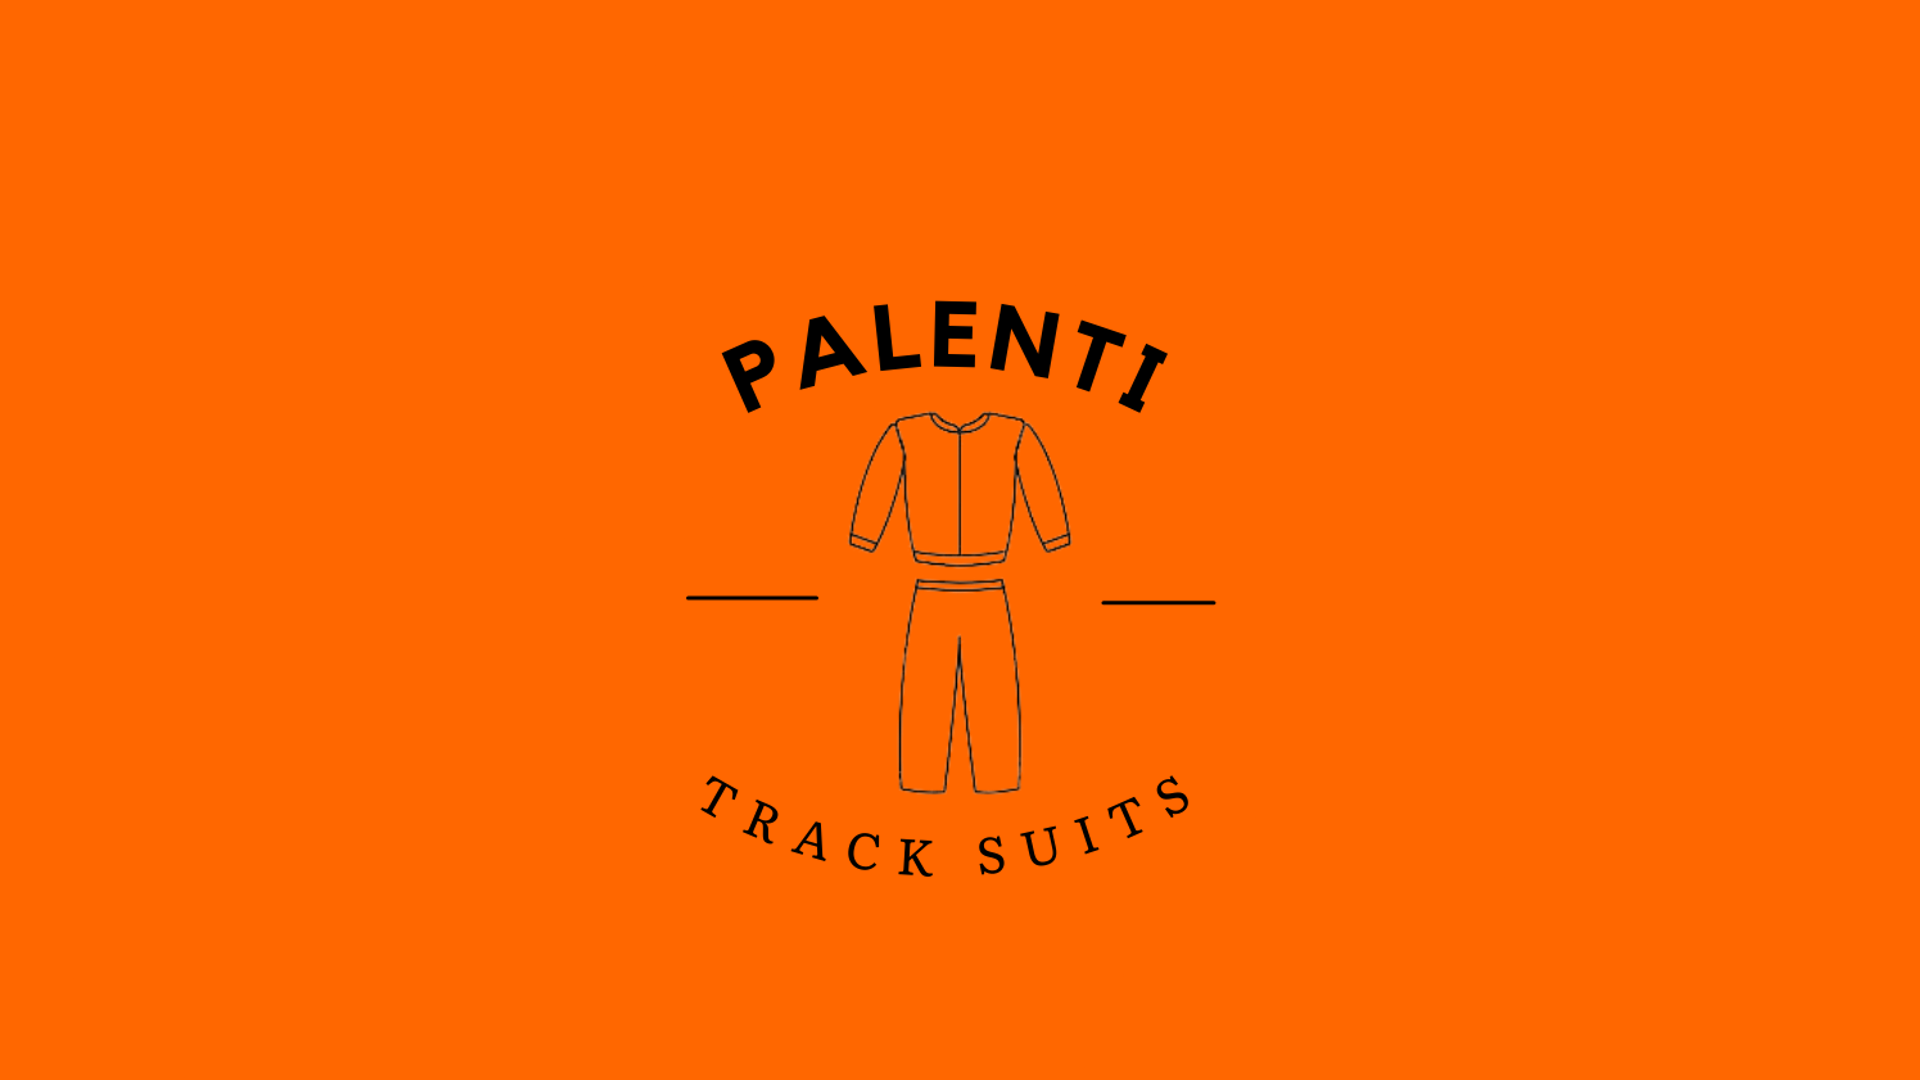 Palenti Track Suits